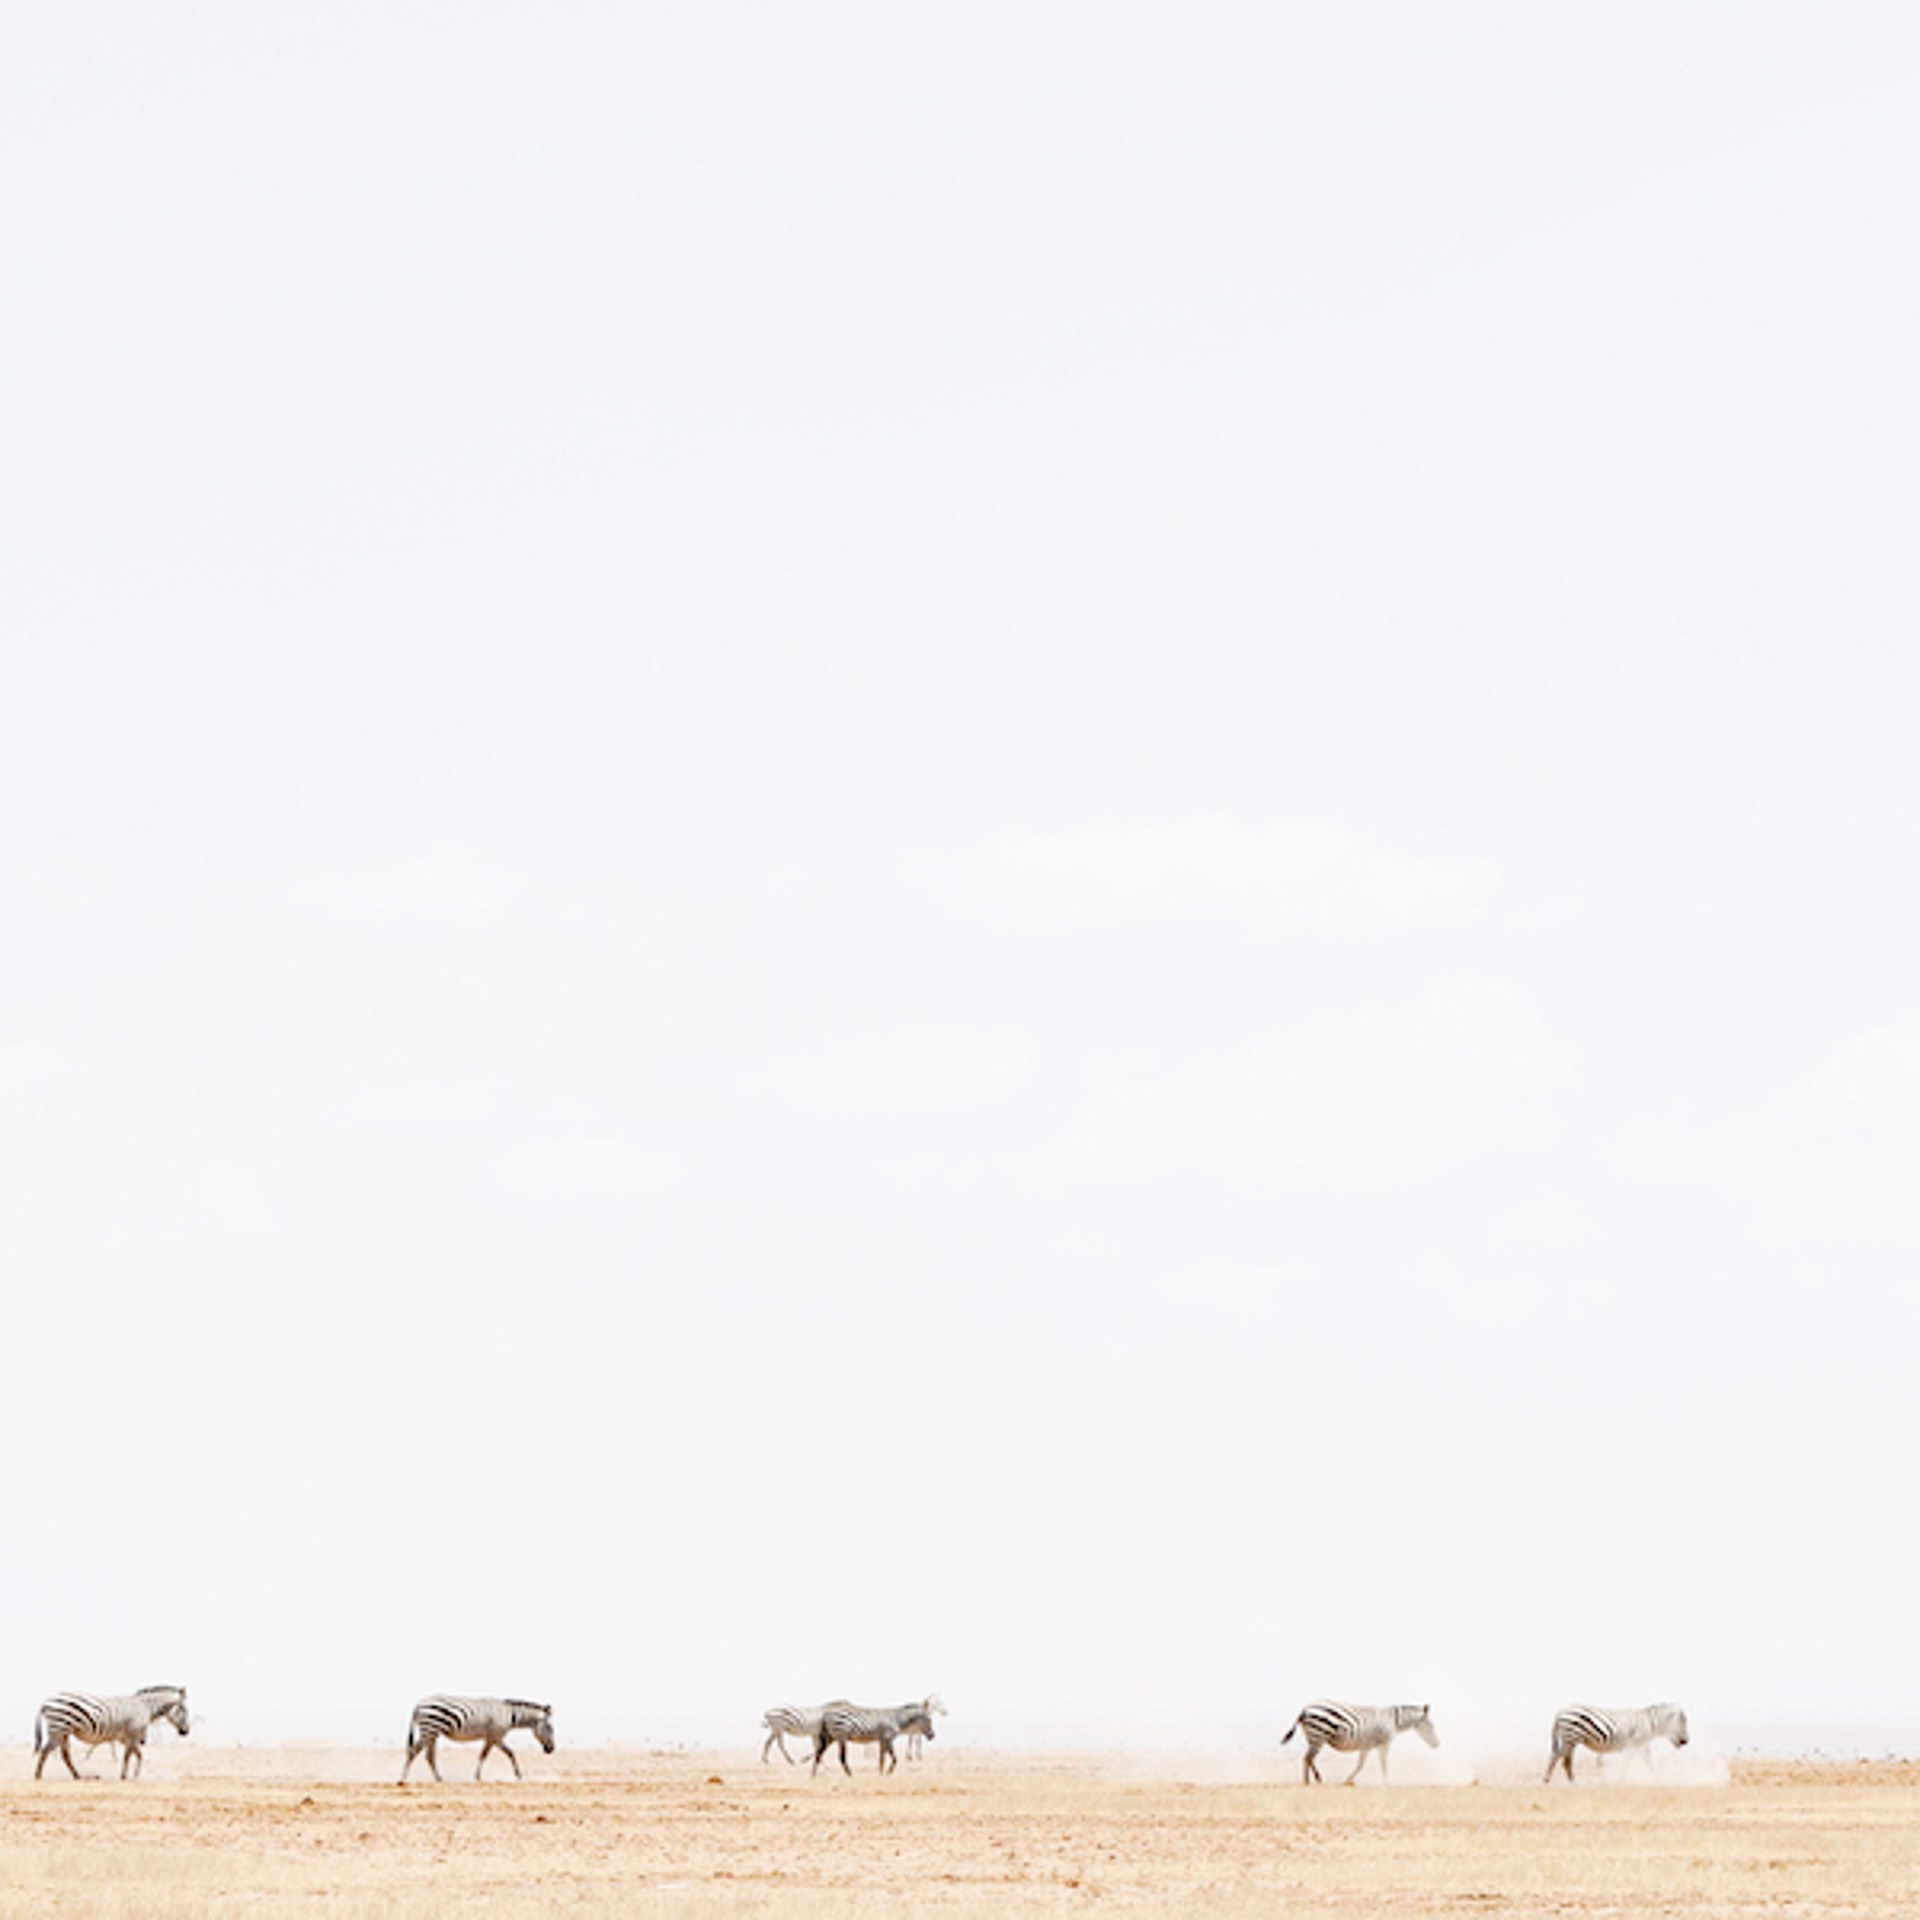 Zebra in Dust by Tess Atkinson